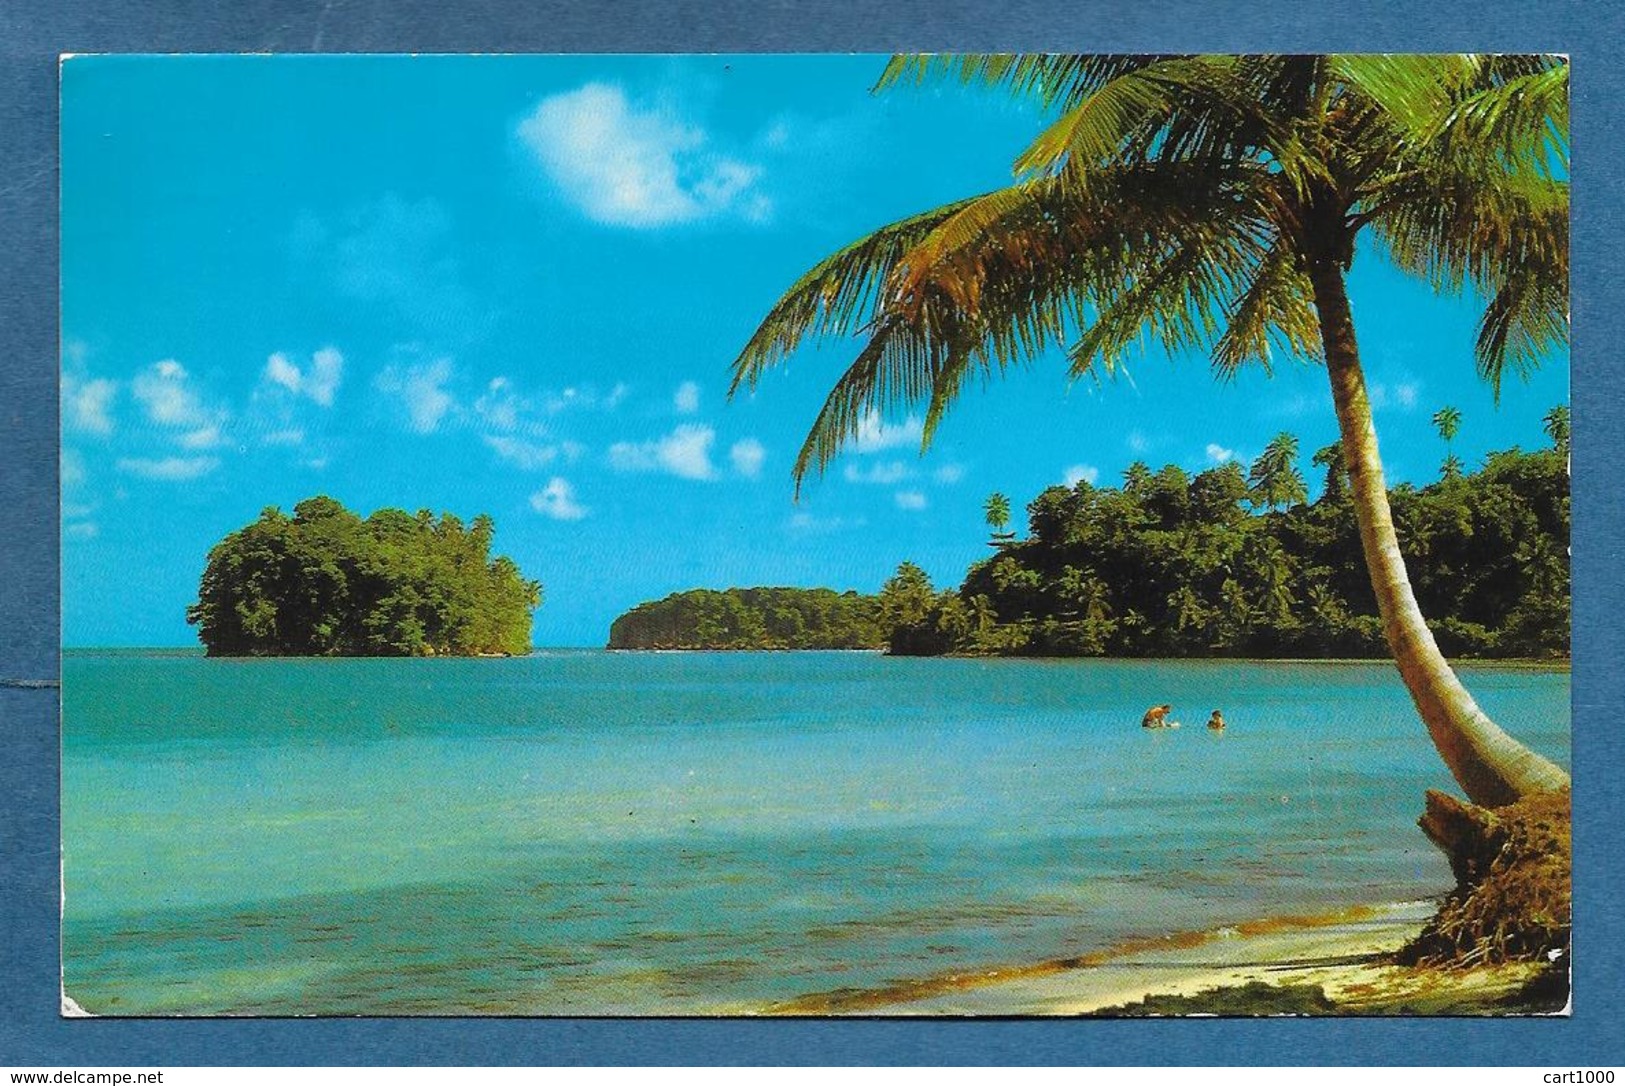 JAMAICA BEAUTIFUL SAN BAY 1971 - Giamaica (1962-...)